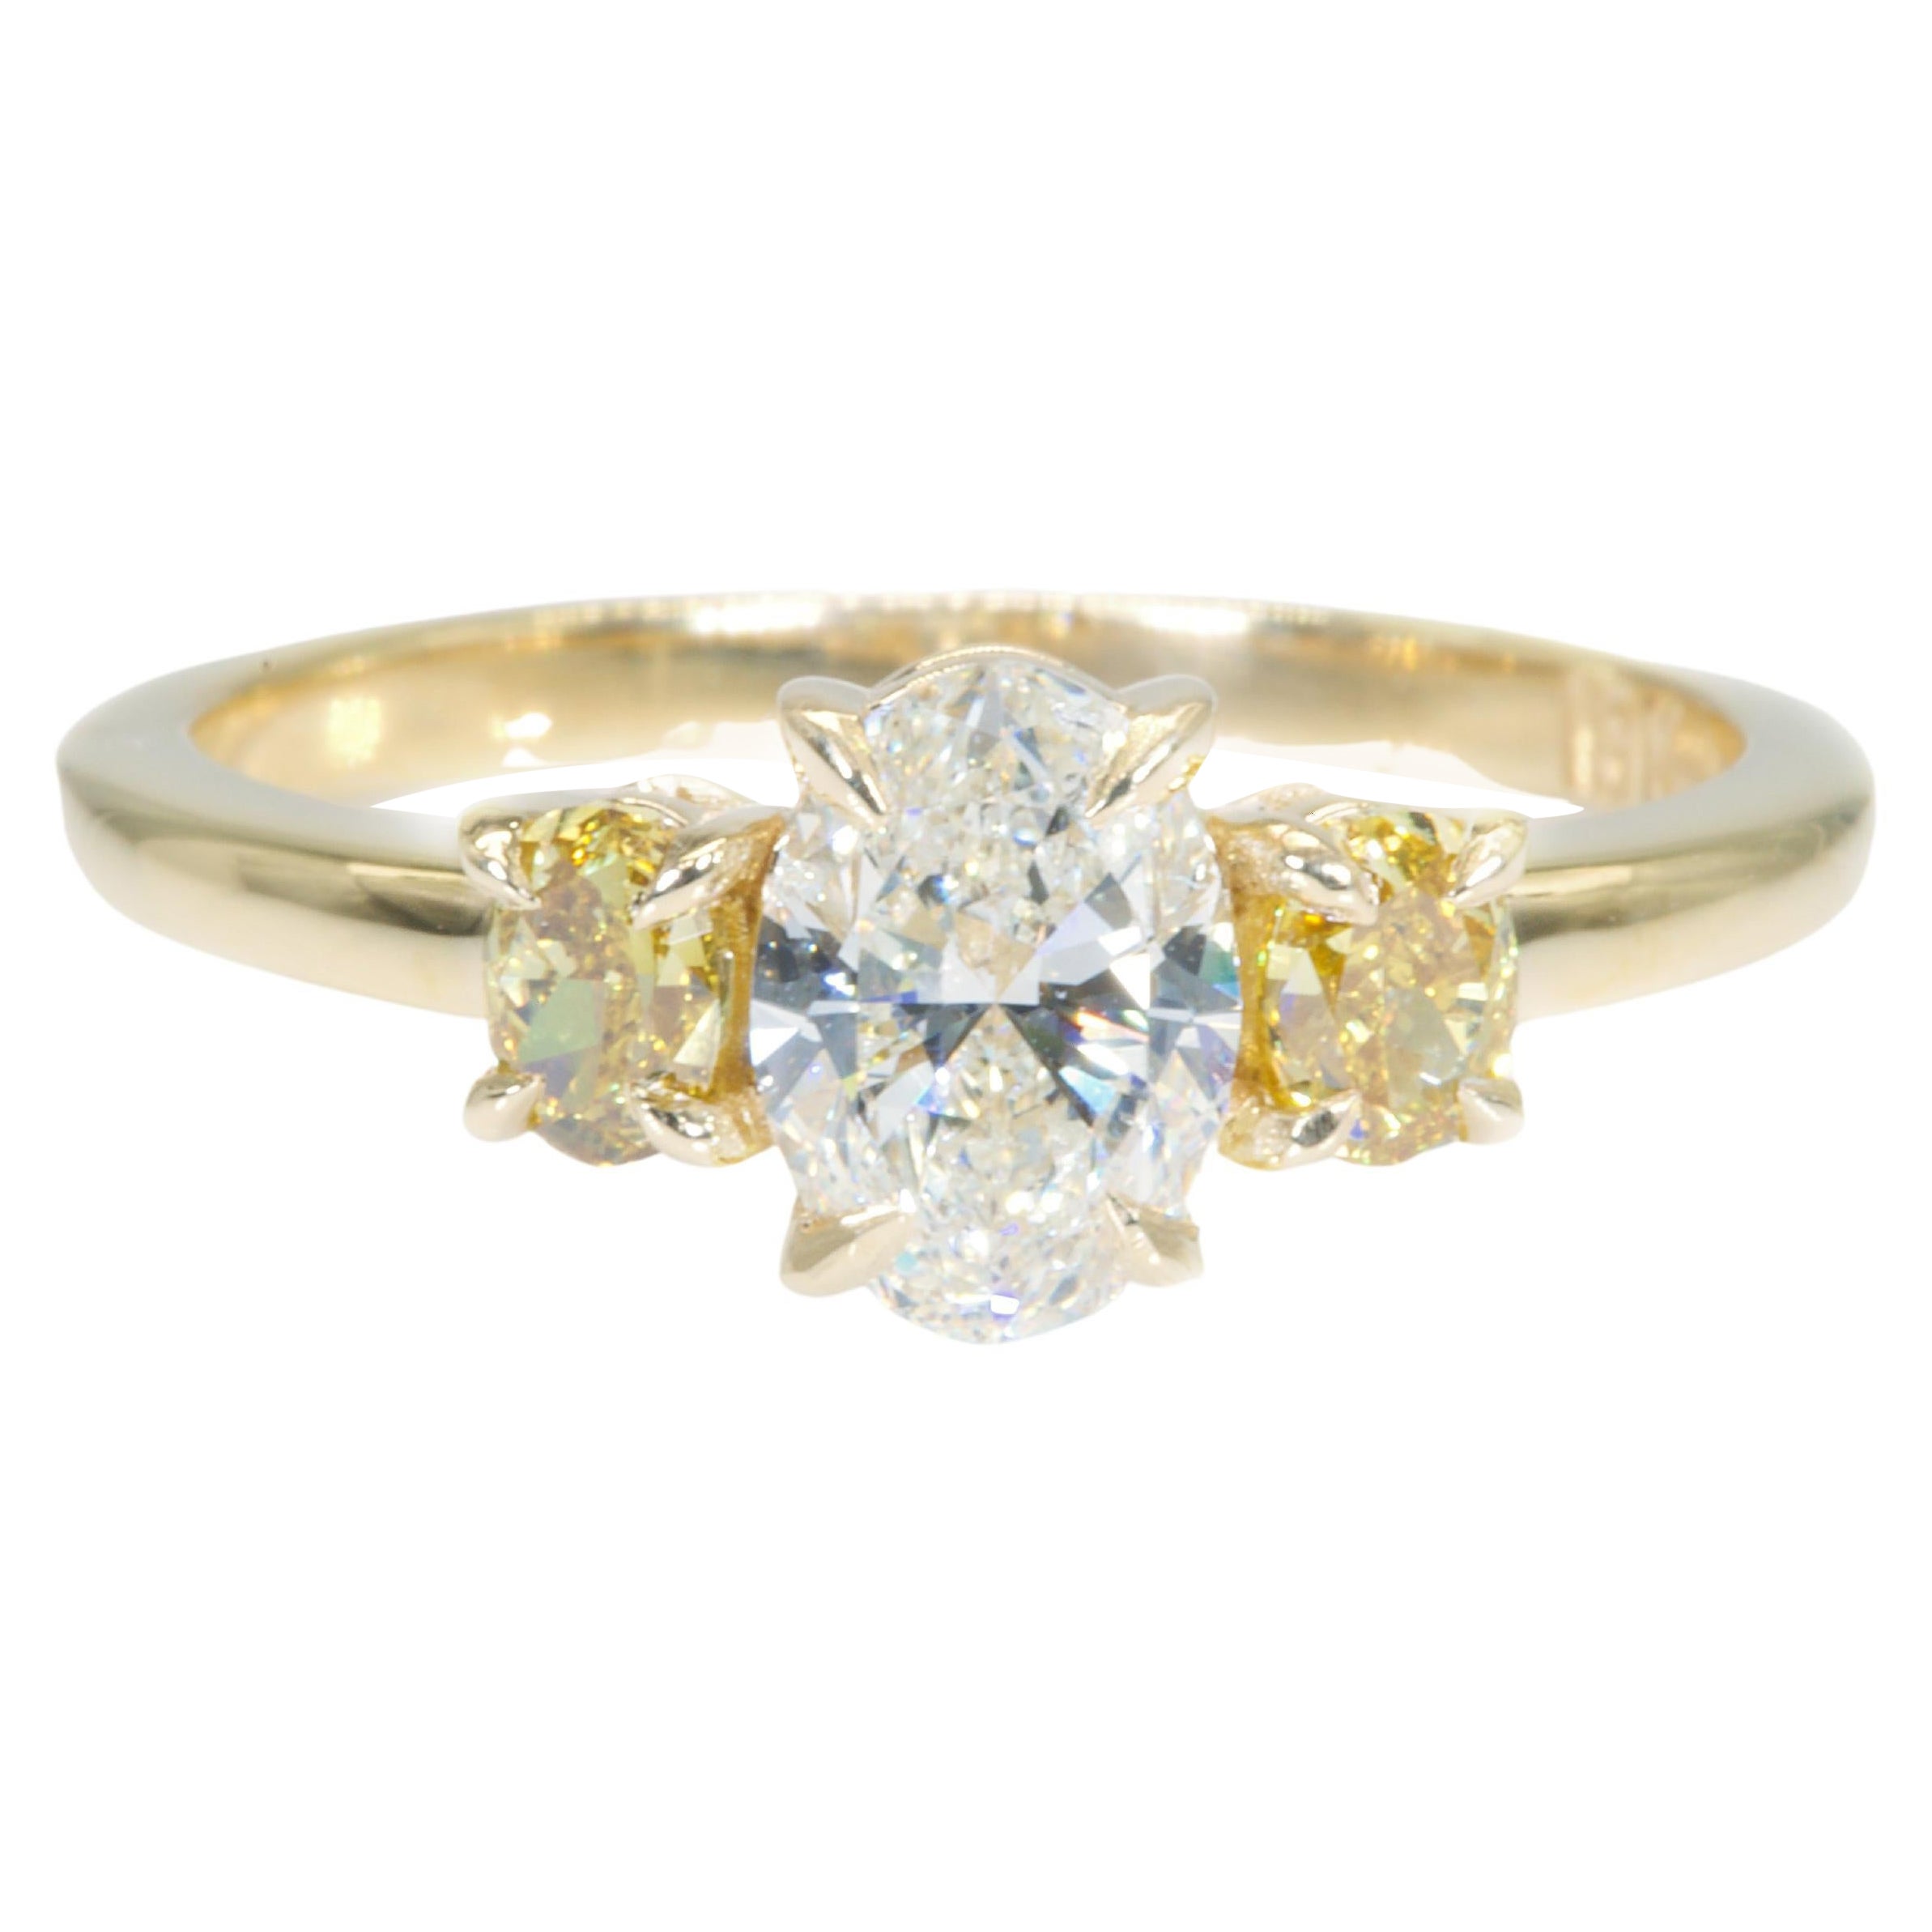 Elegant 18k Yellow Gold Three Stone Ring with 0.70 Ct Natural Diamonds, AIG Cert